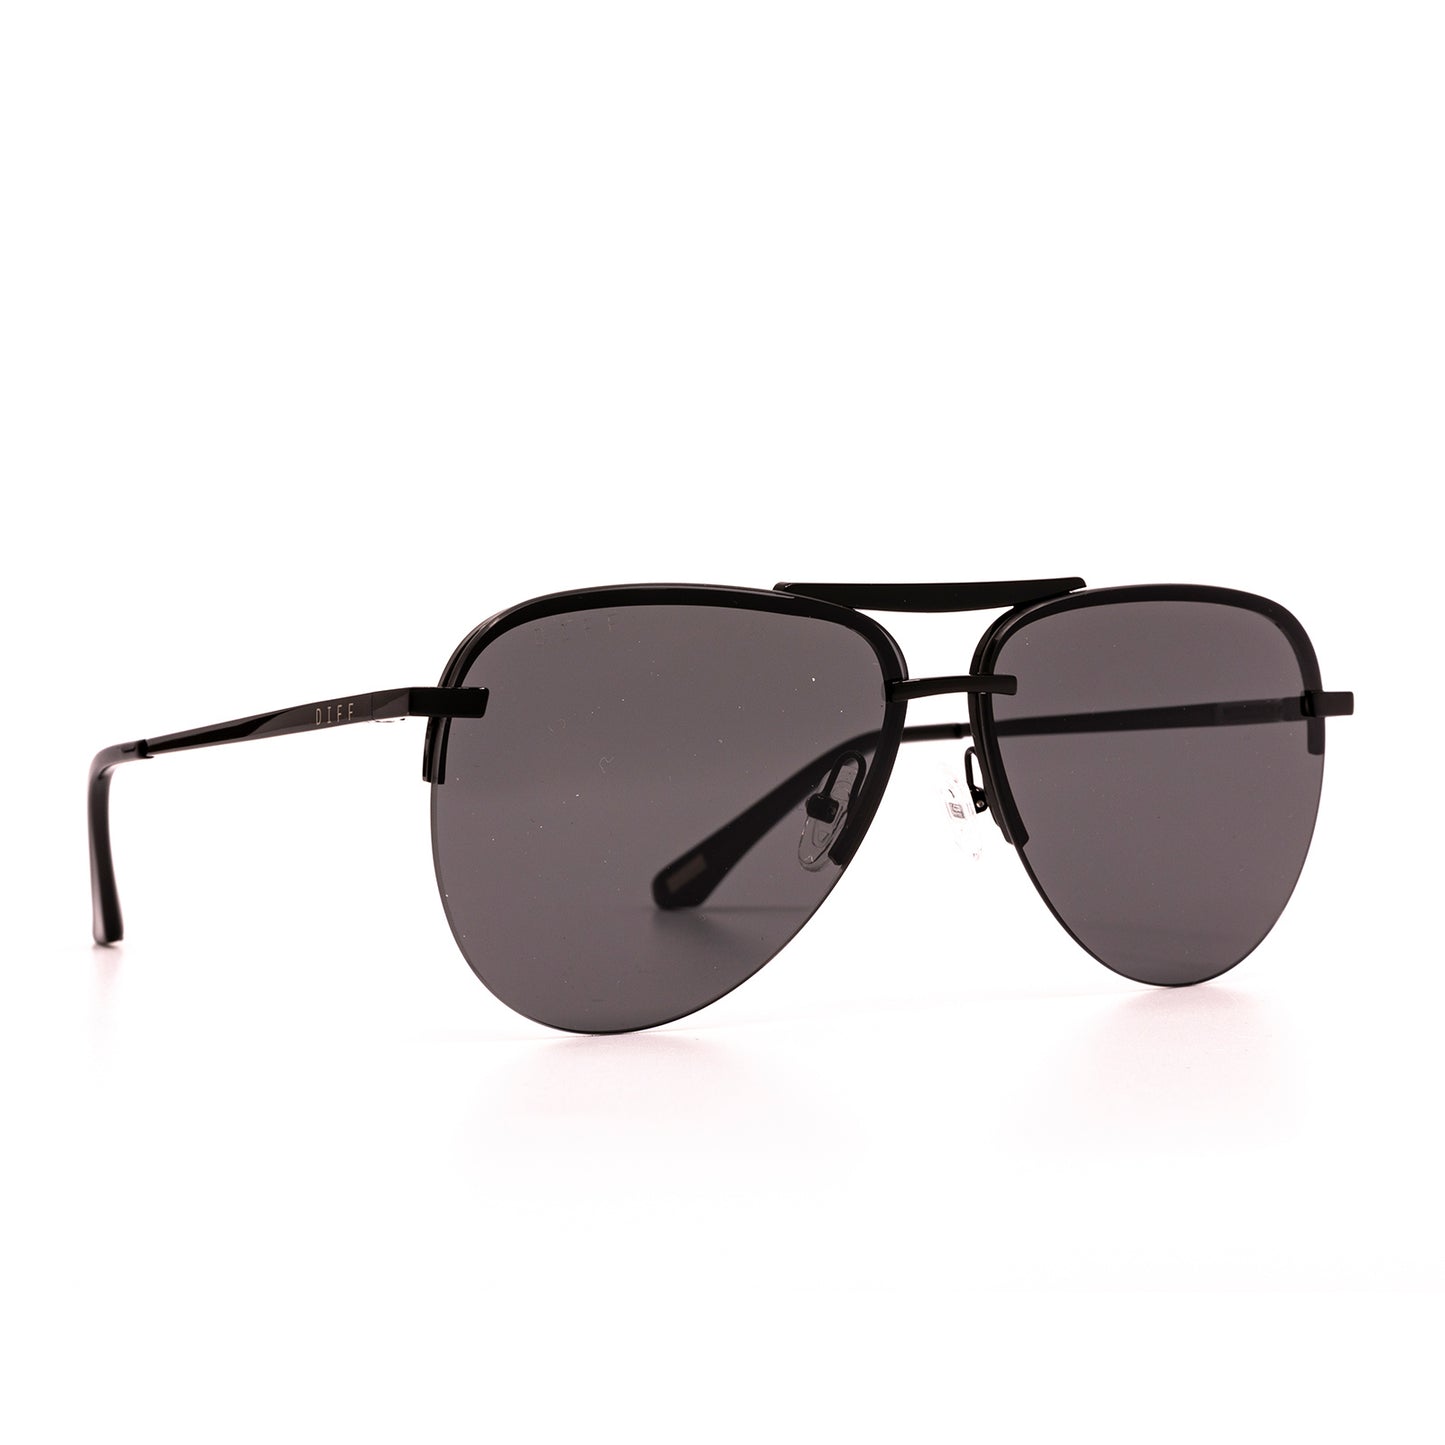 Tahoe Black + Grey Sunglasses